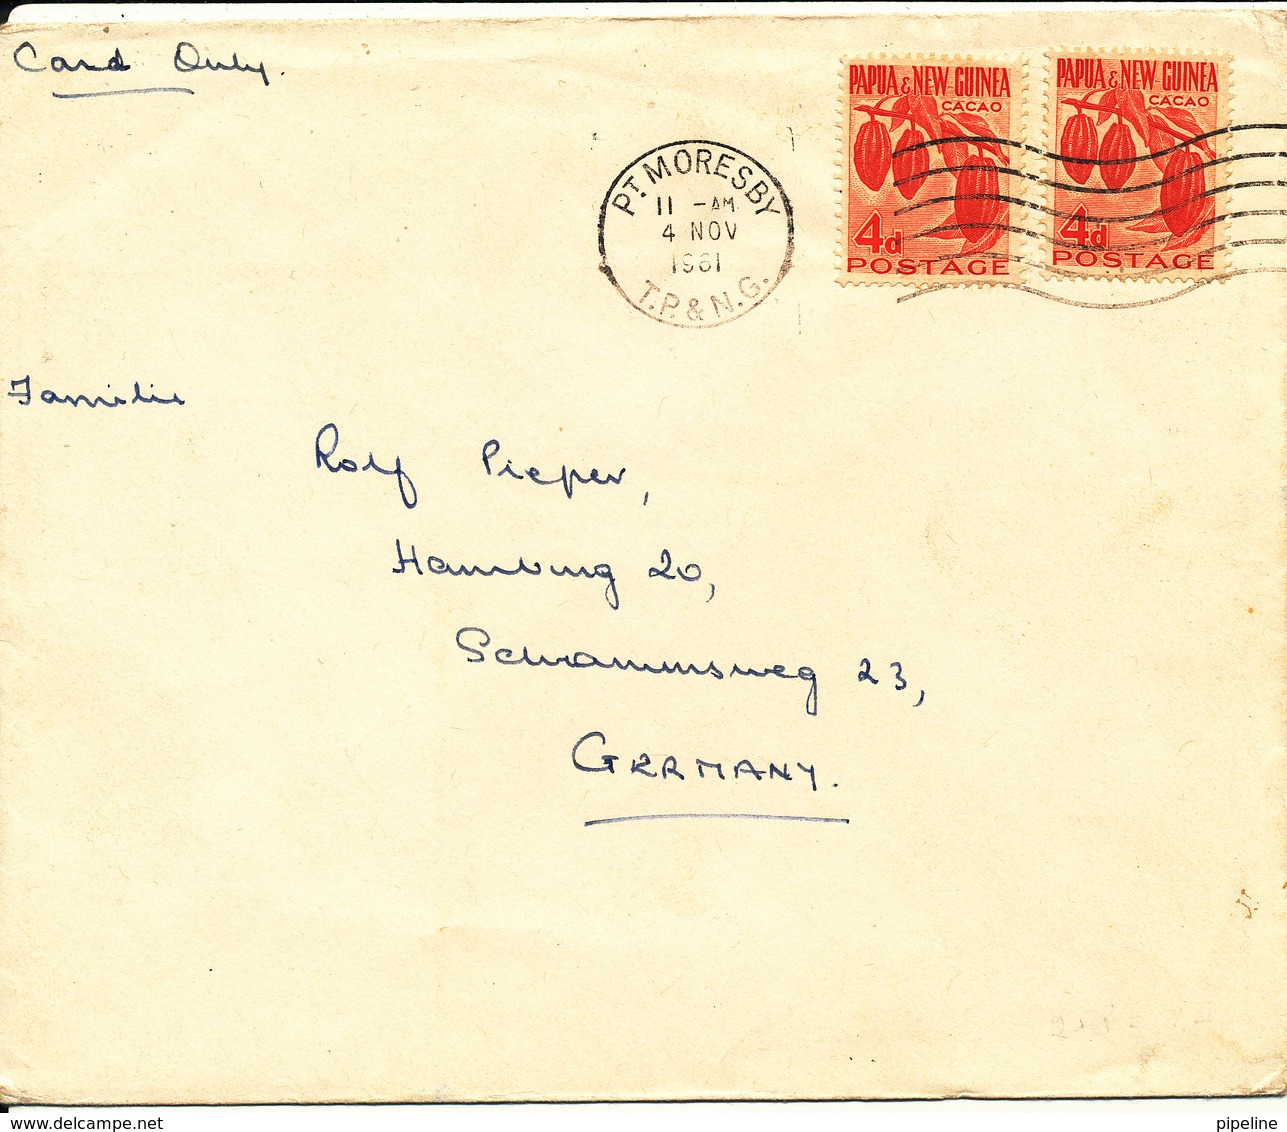 Papua New Guinea Cover Sent To Germany PT Moresby 4-11-1961 - Papua New Guinea